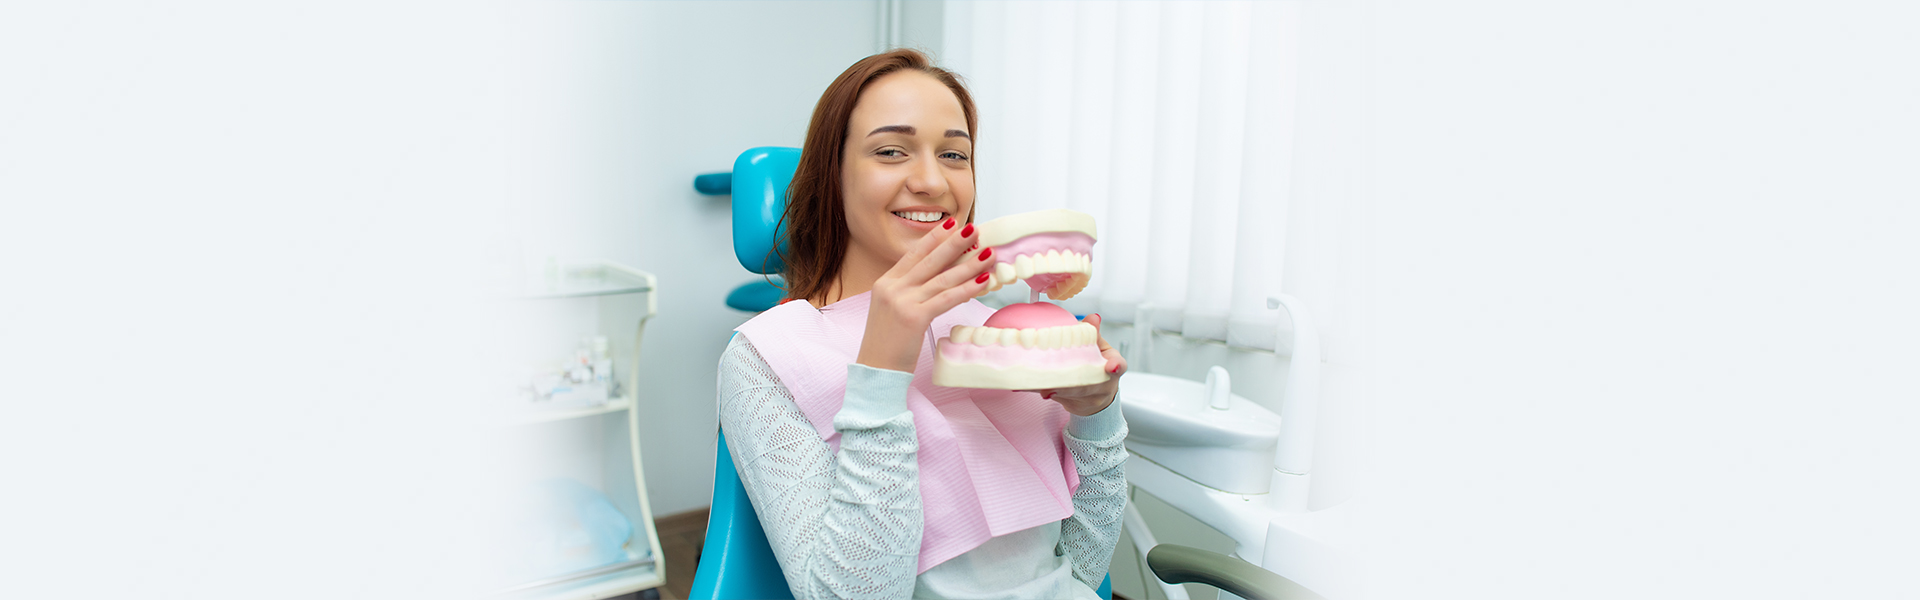 5 Modern Dental Technologies that Make Your Visit Comfortable